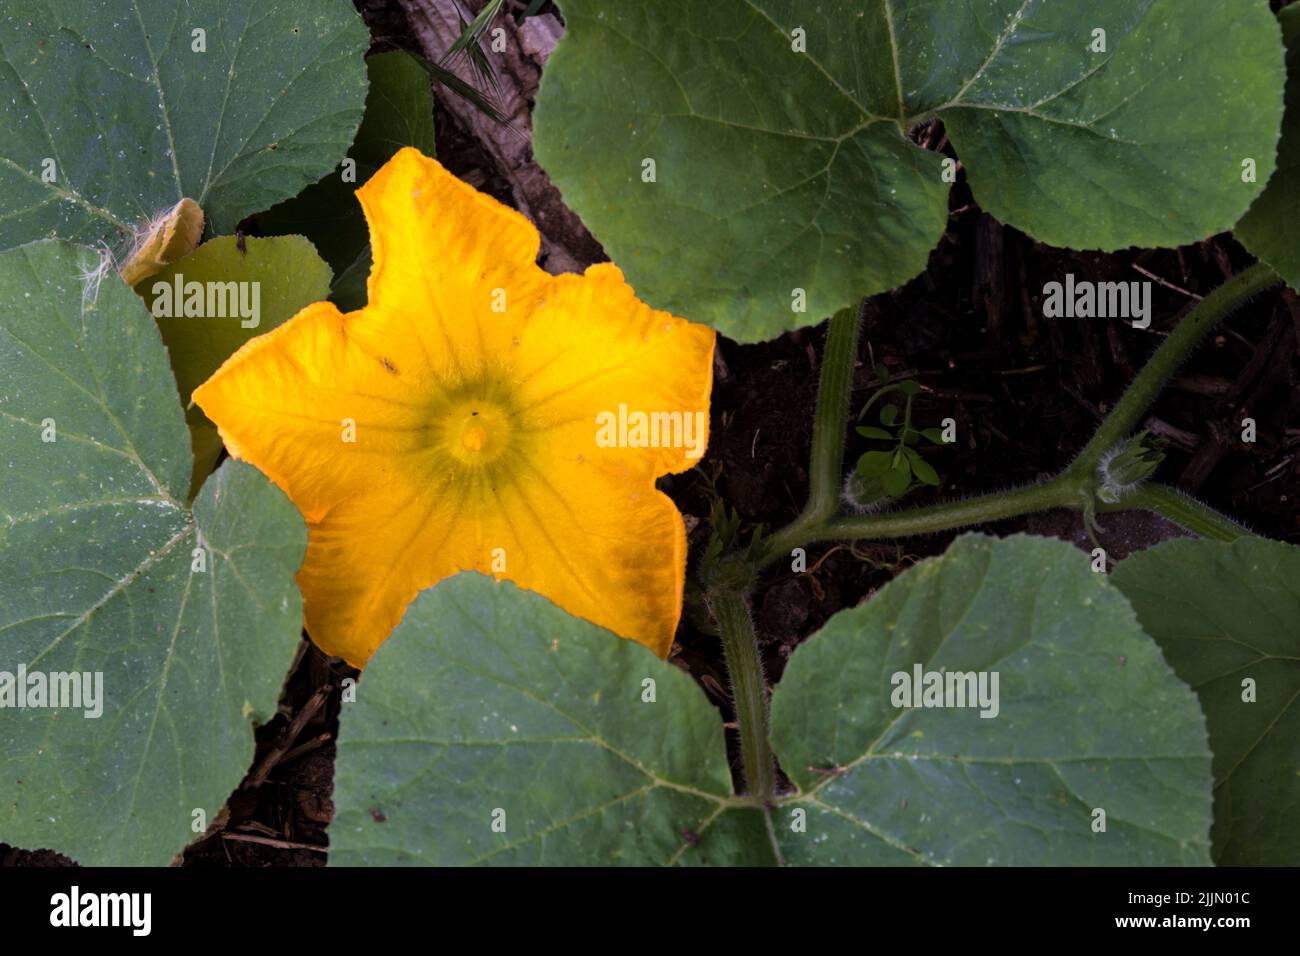 Flower on butternut squash, Cucurbita moschata, growing in a vegetable garden or allotment. Stock Photo